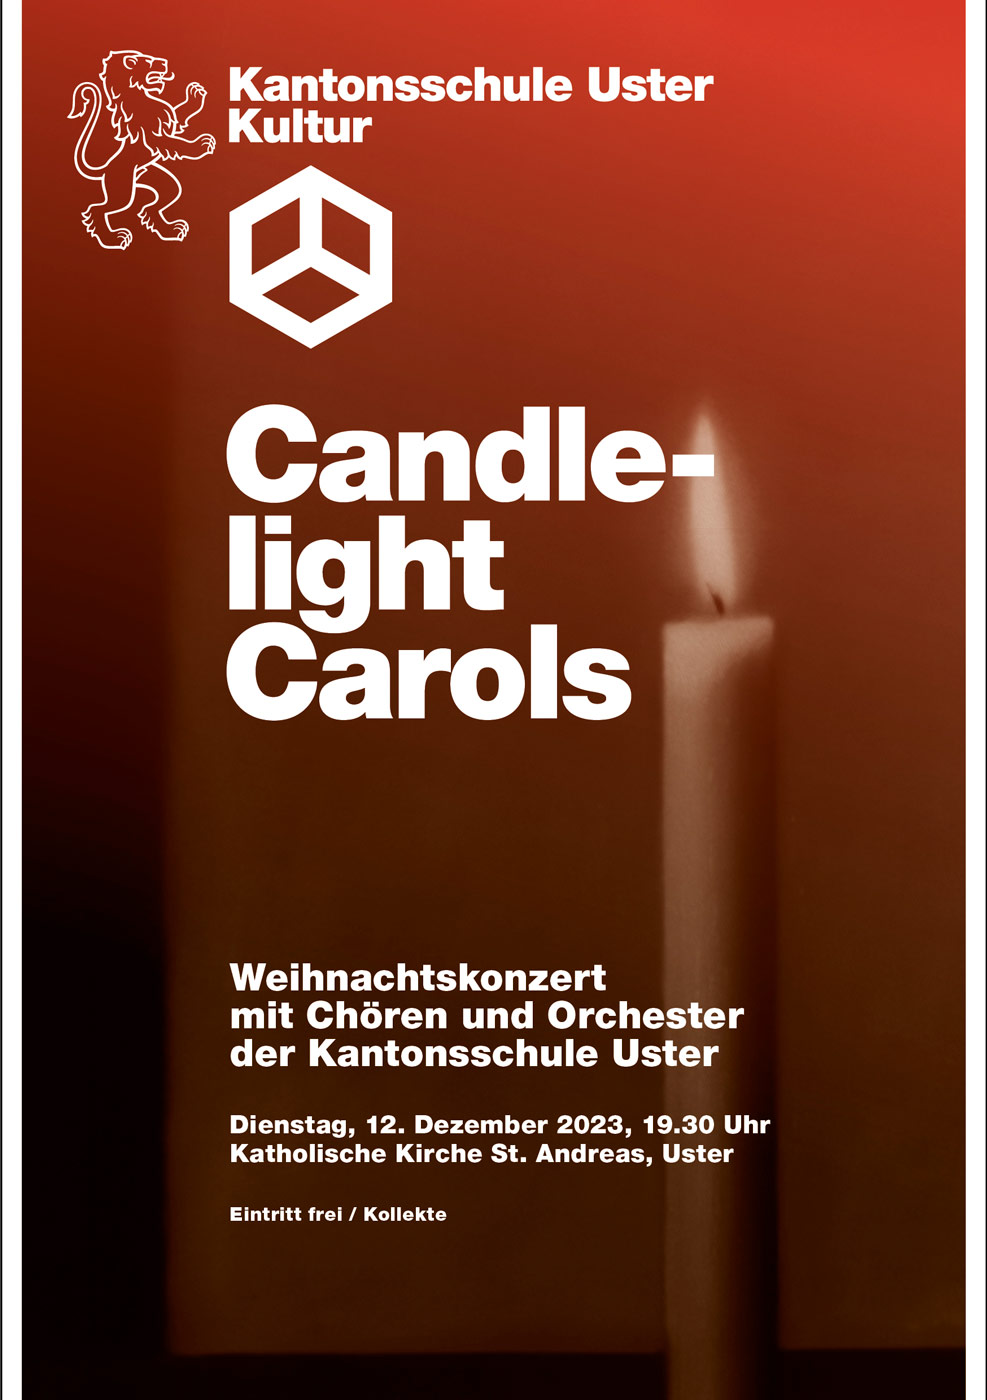 Candlelight Carols: Weihnachtskonzert